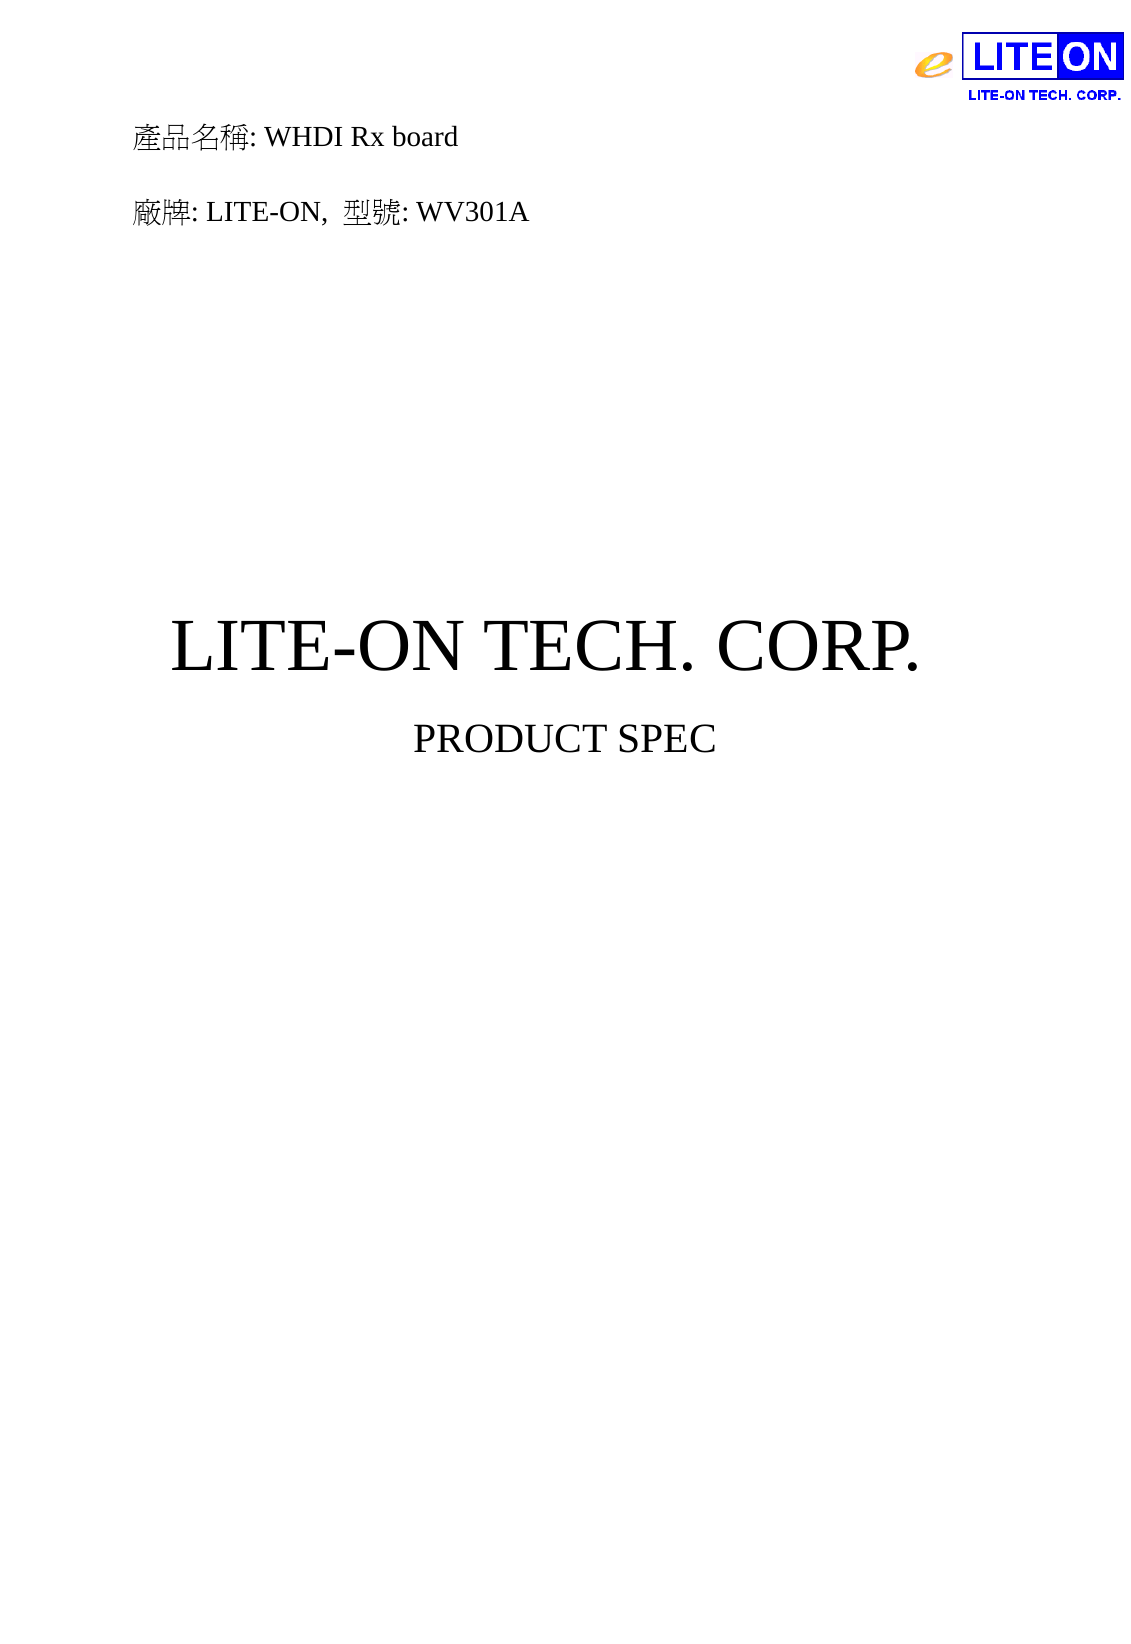  產品名稱: WHDI Rx board 廠牌: LITE-ON,  型號: WV301A    LITE-ON TECH. CORP. PRODUCT SPEC